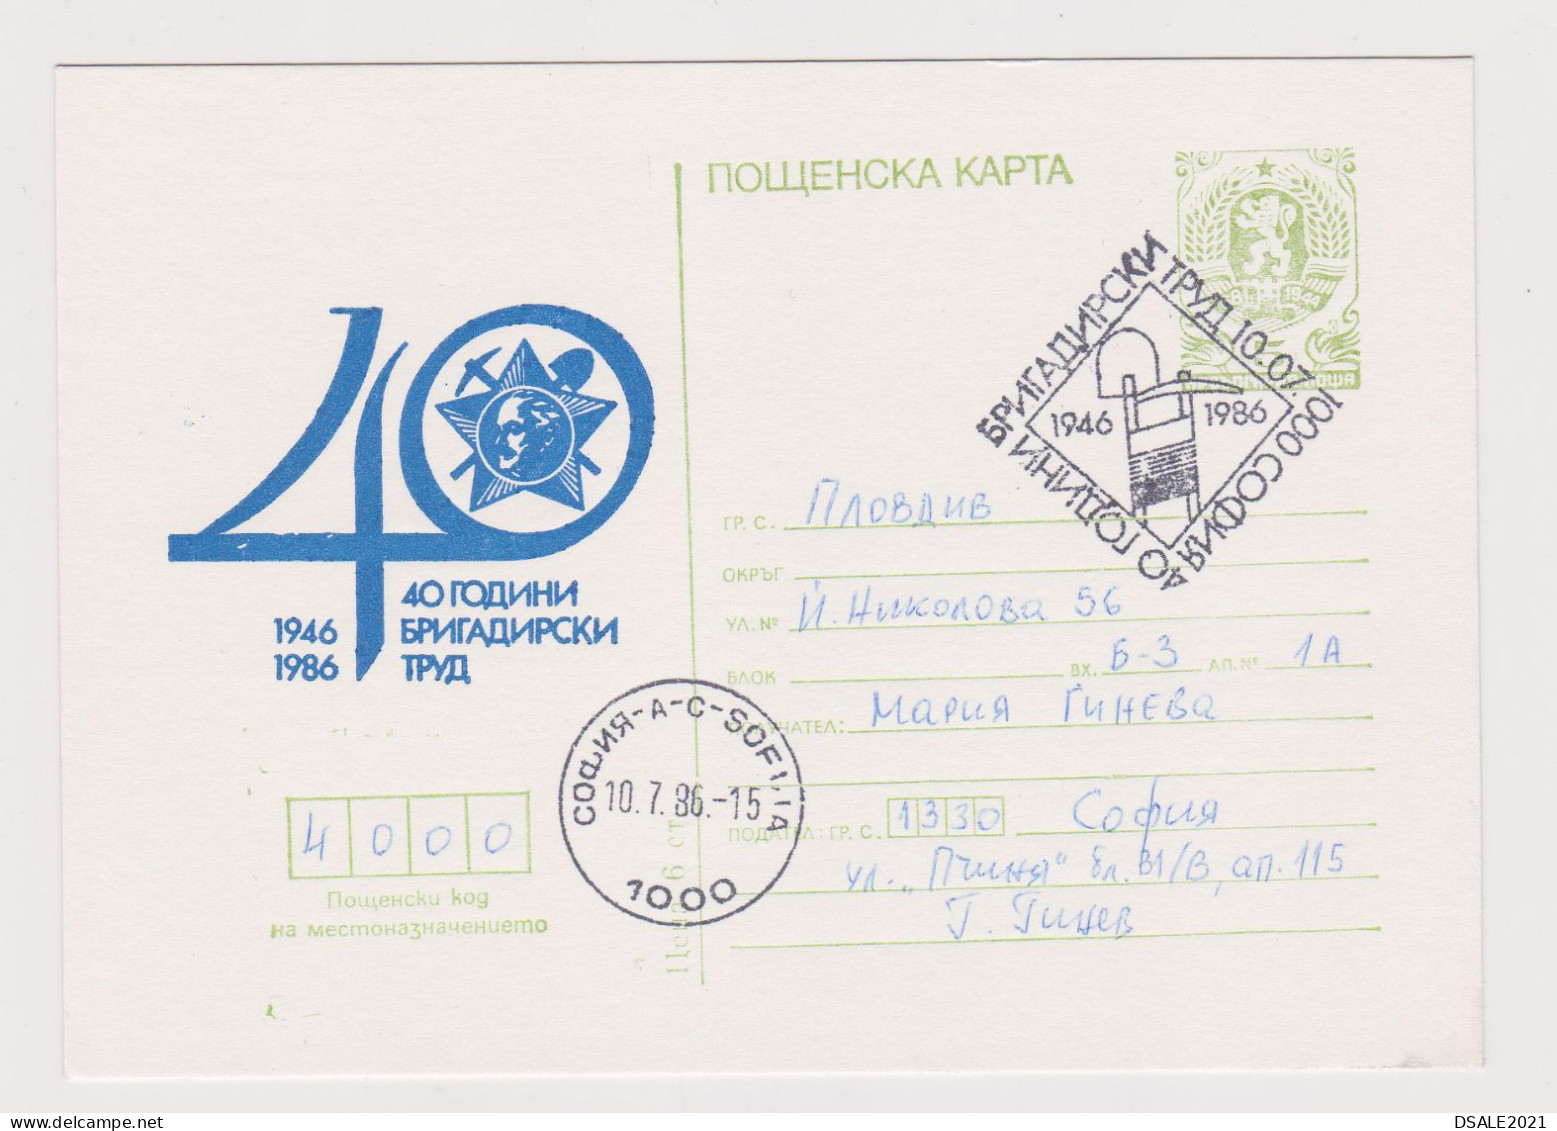 Bulgaria Bulgarie Bulgarien 1986 Postal Stationery Card, Ganzsachen, Entier, 1946 Bulgarian Youth Brigade Movement 67488 - Cartes Postales